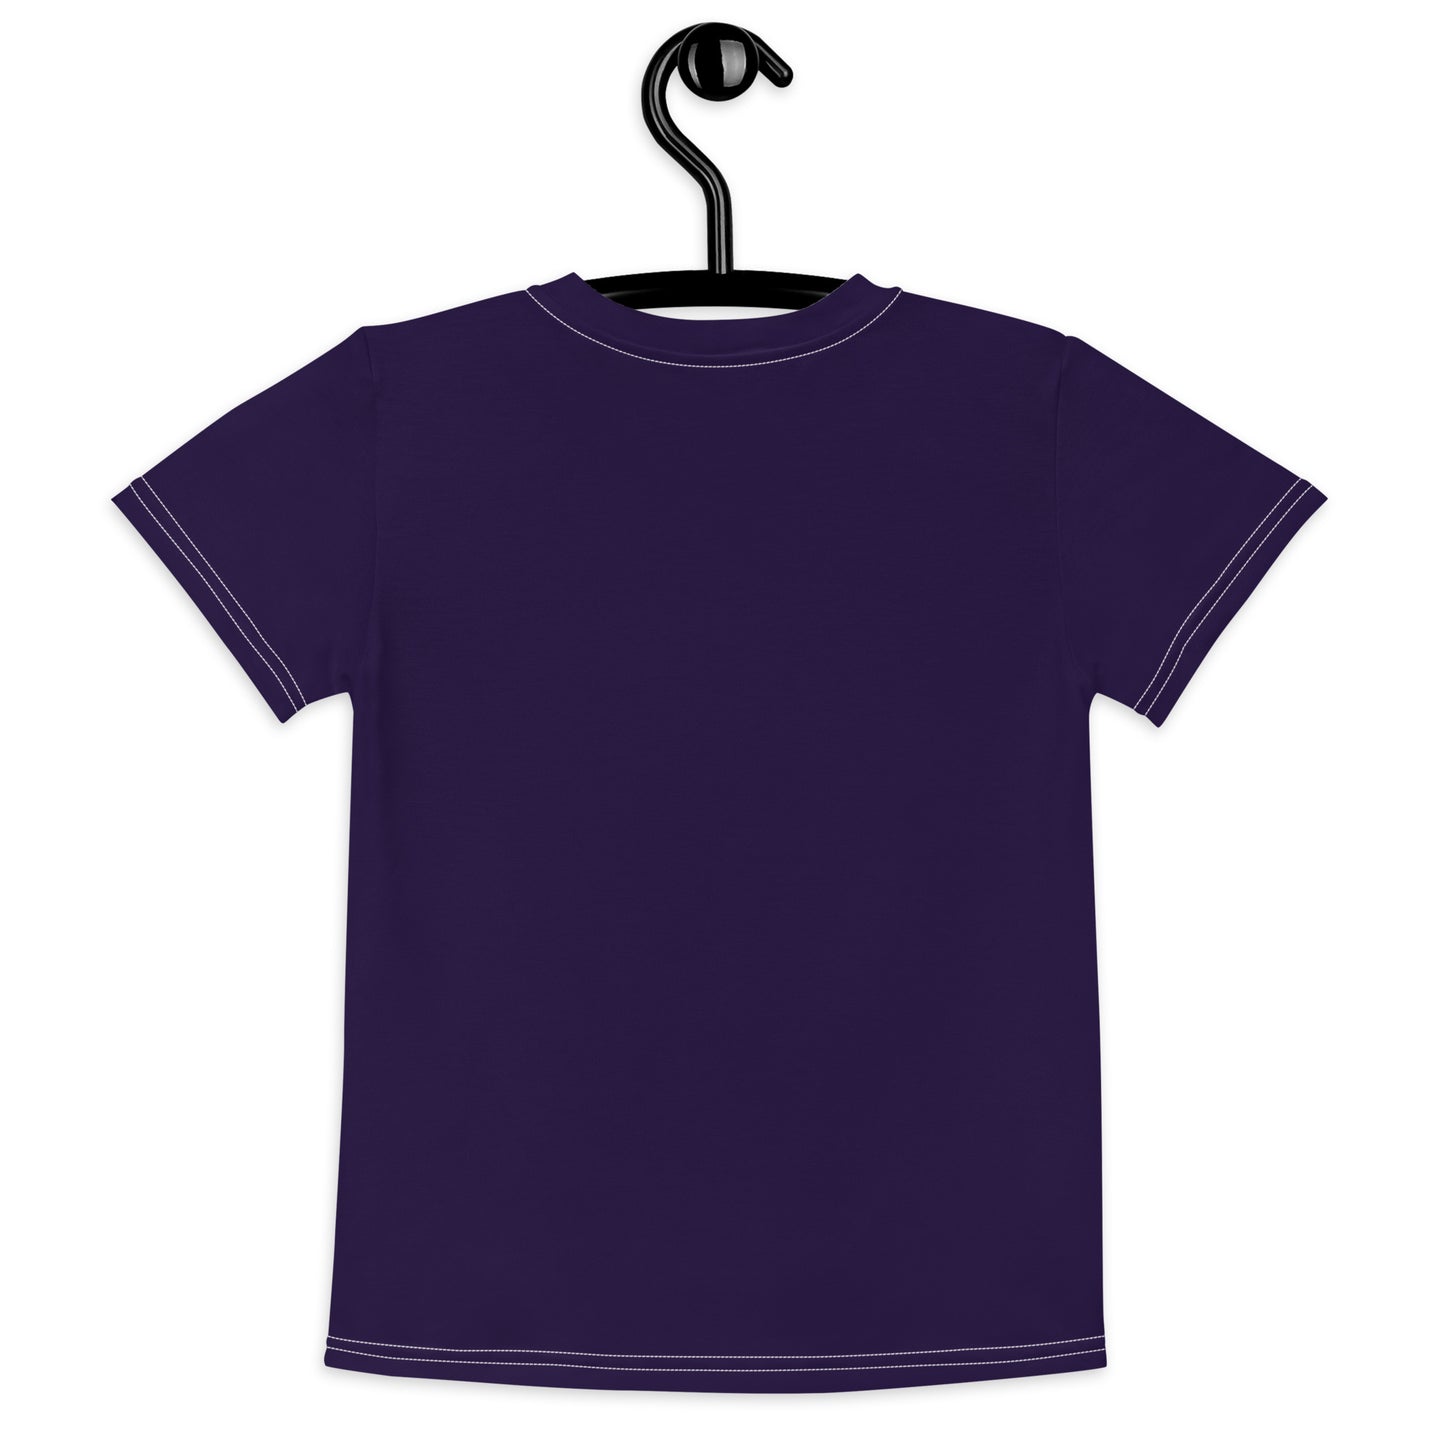 God's Promise (Purple) Kids crew neck t-shirt